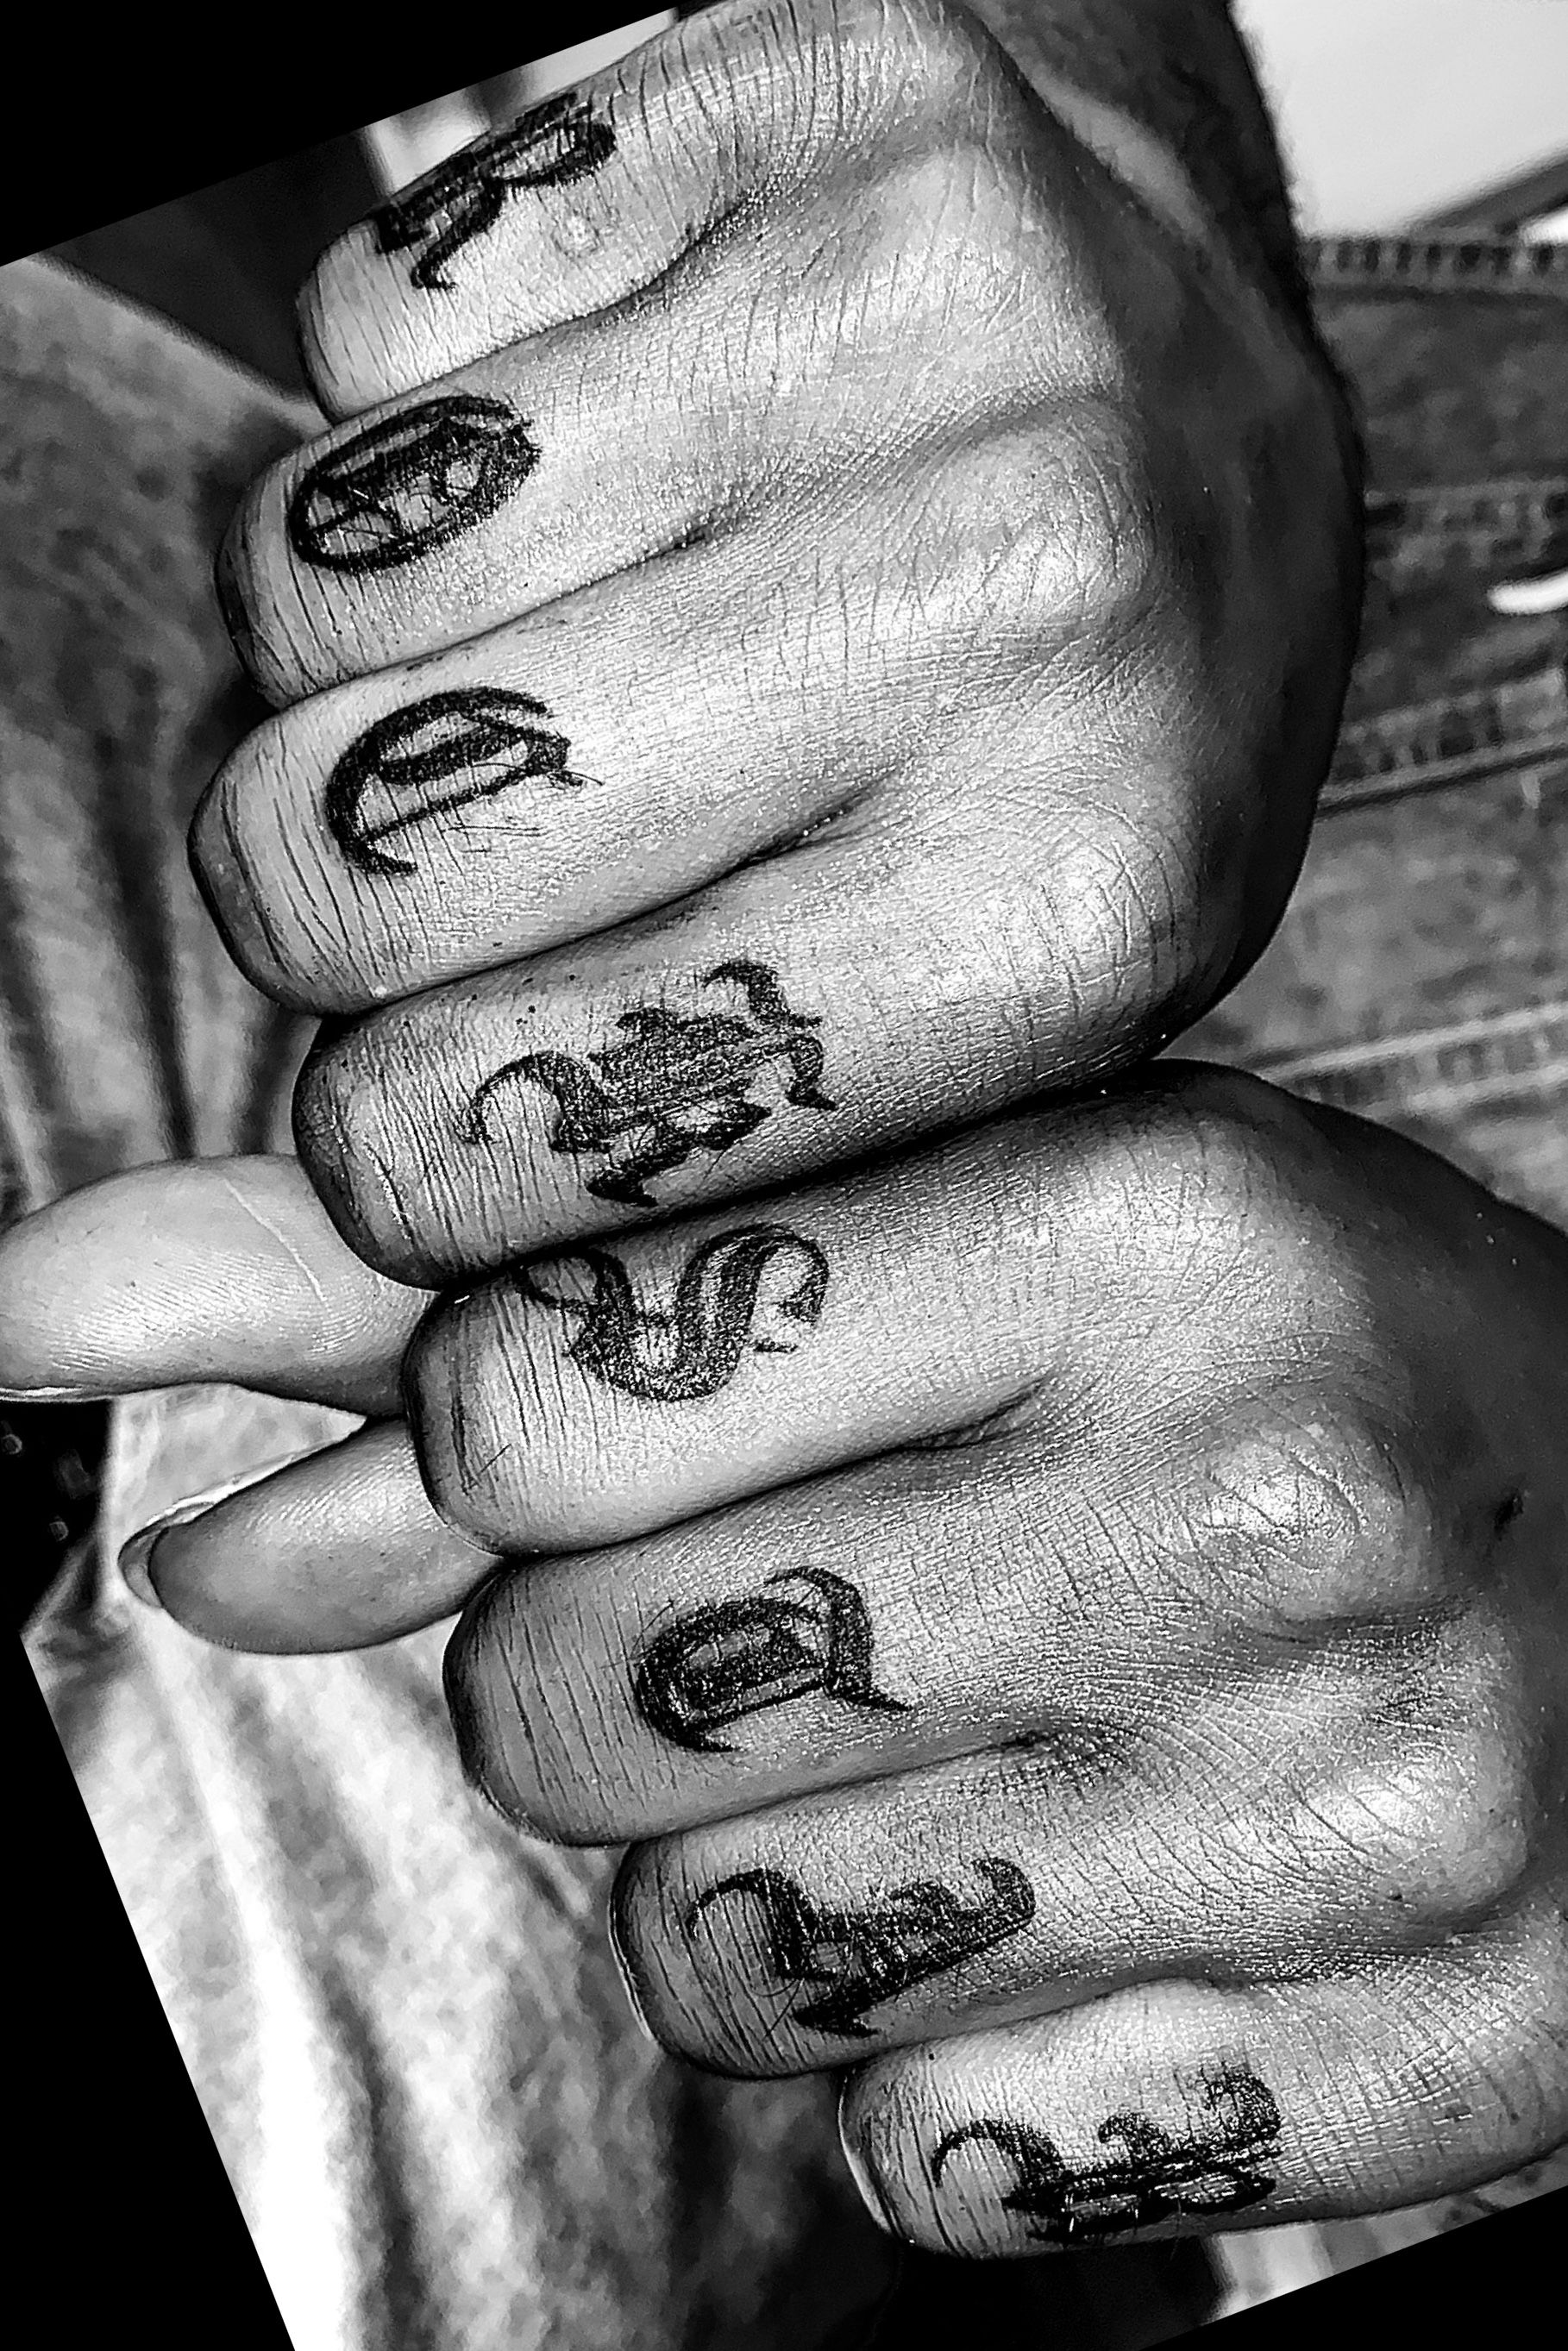 39068 Finger Tattoo Images Stock Photos  Vectors  Shutterstock